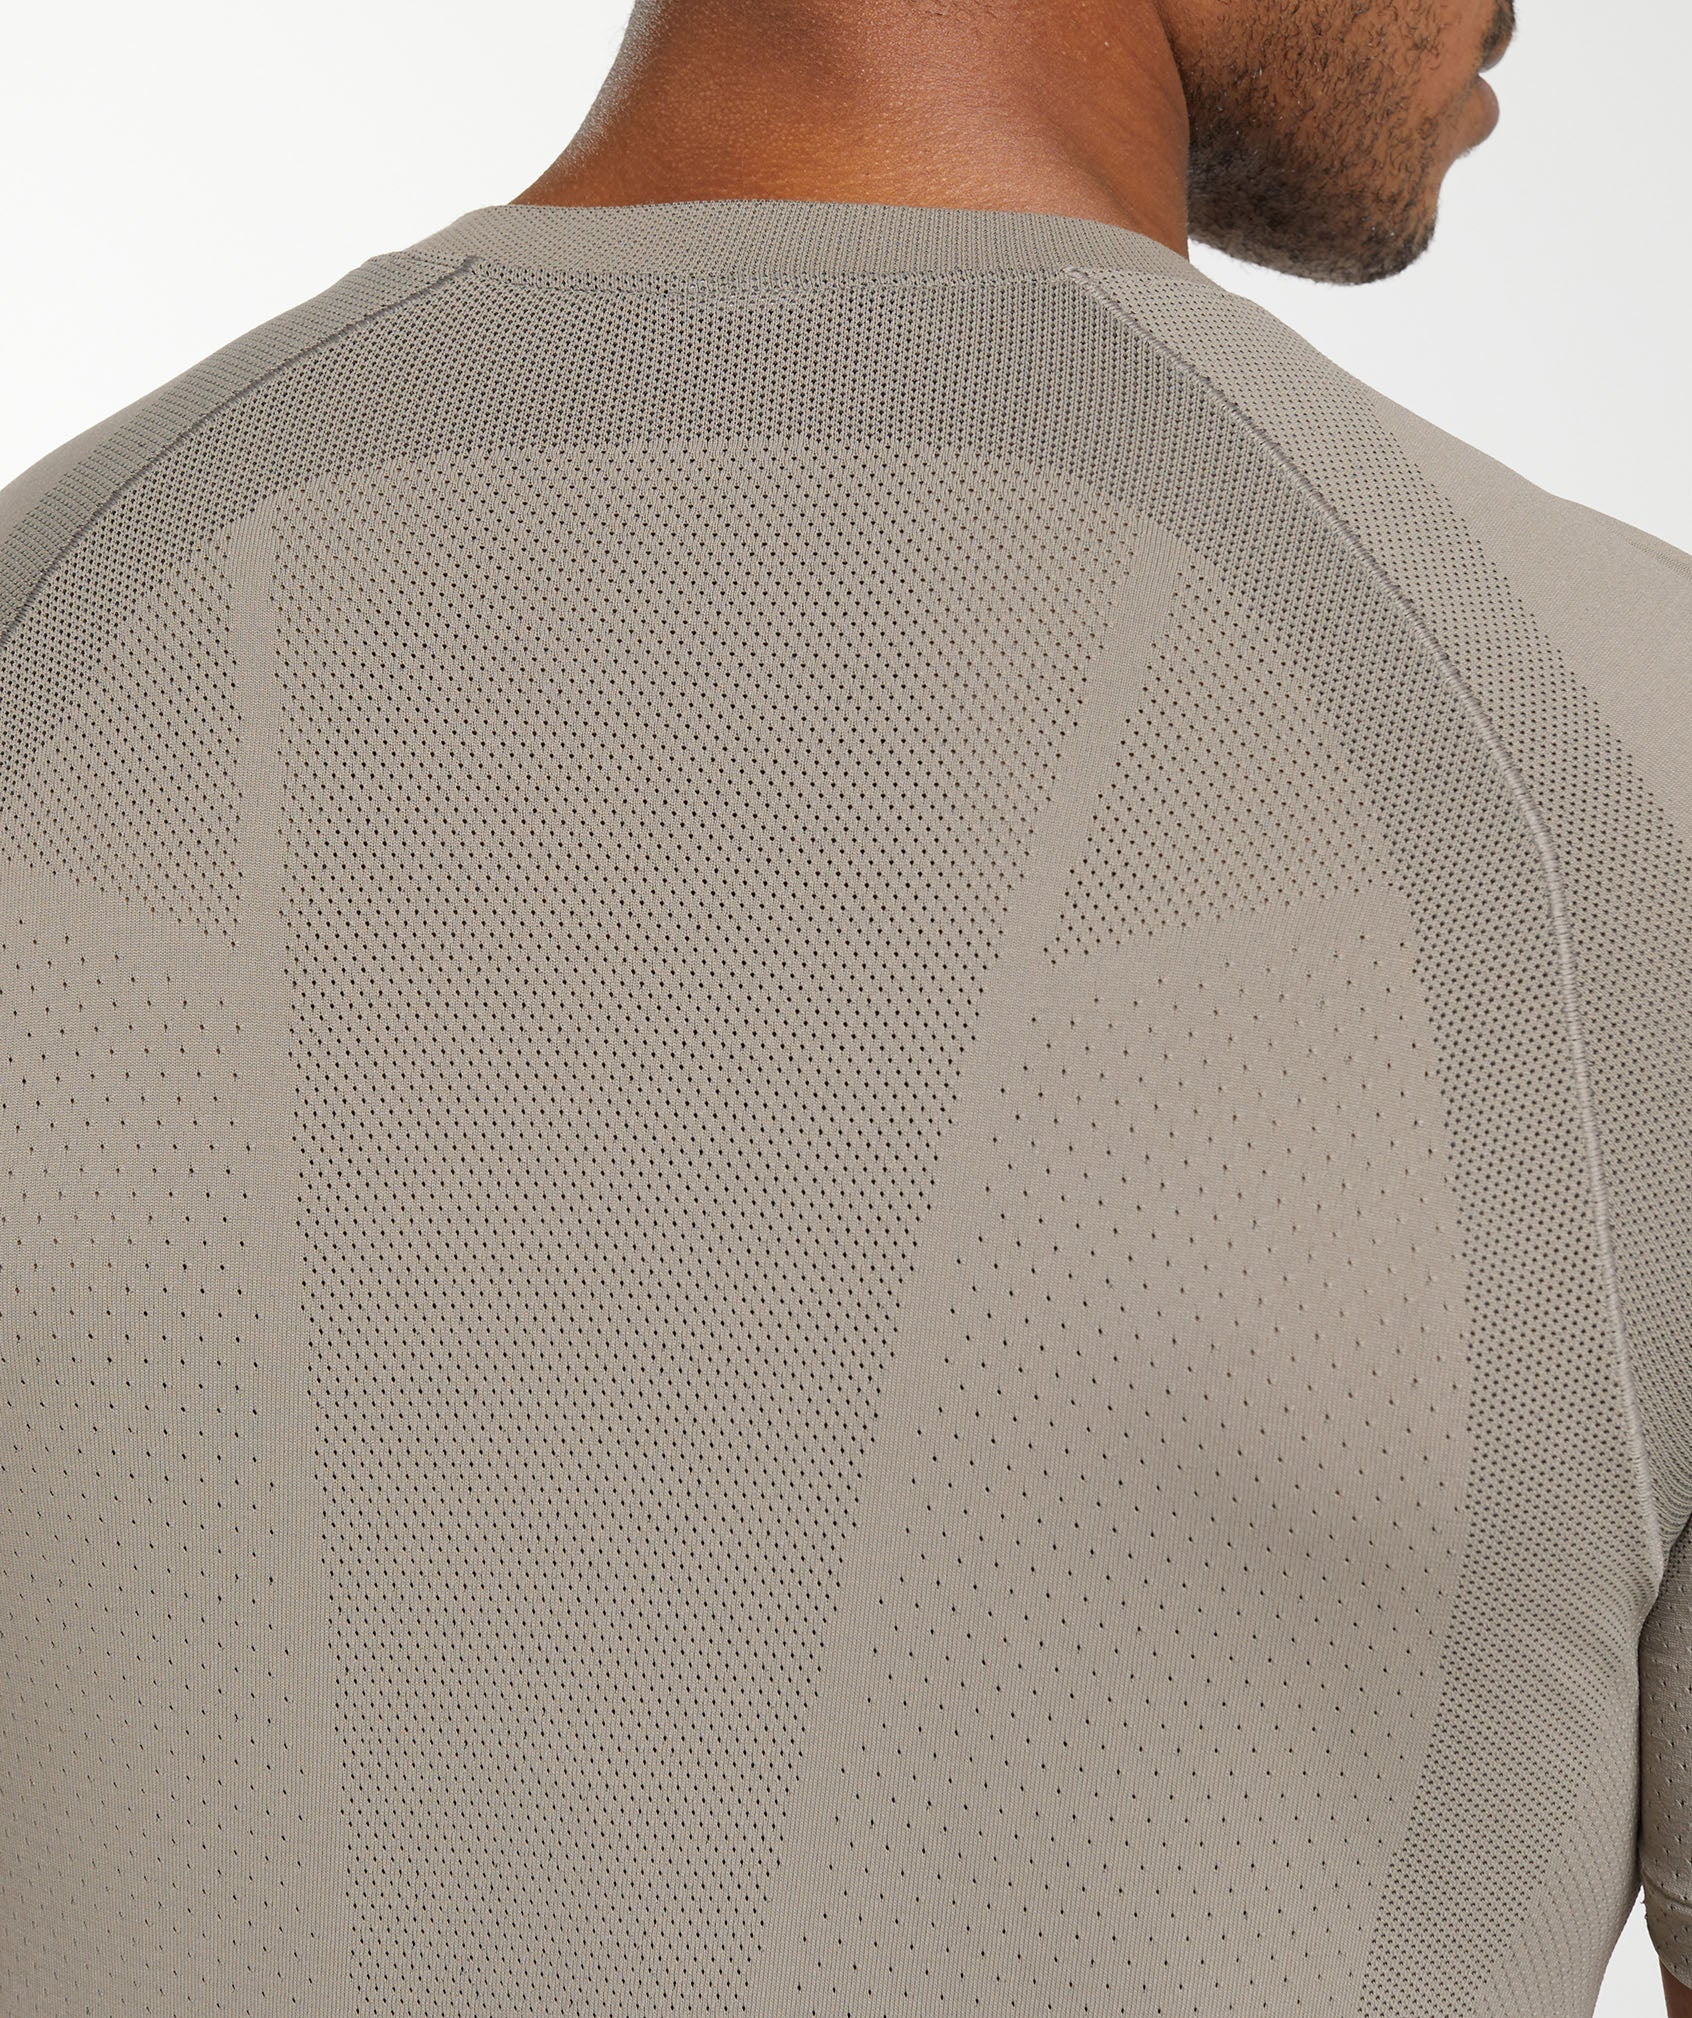 Apex Seamless T-Shirt in Linen Brown/Black - view 6